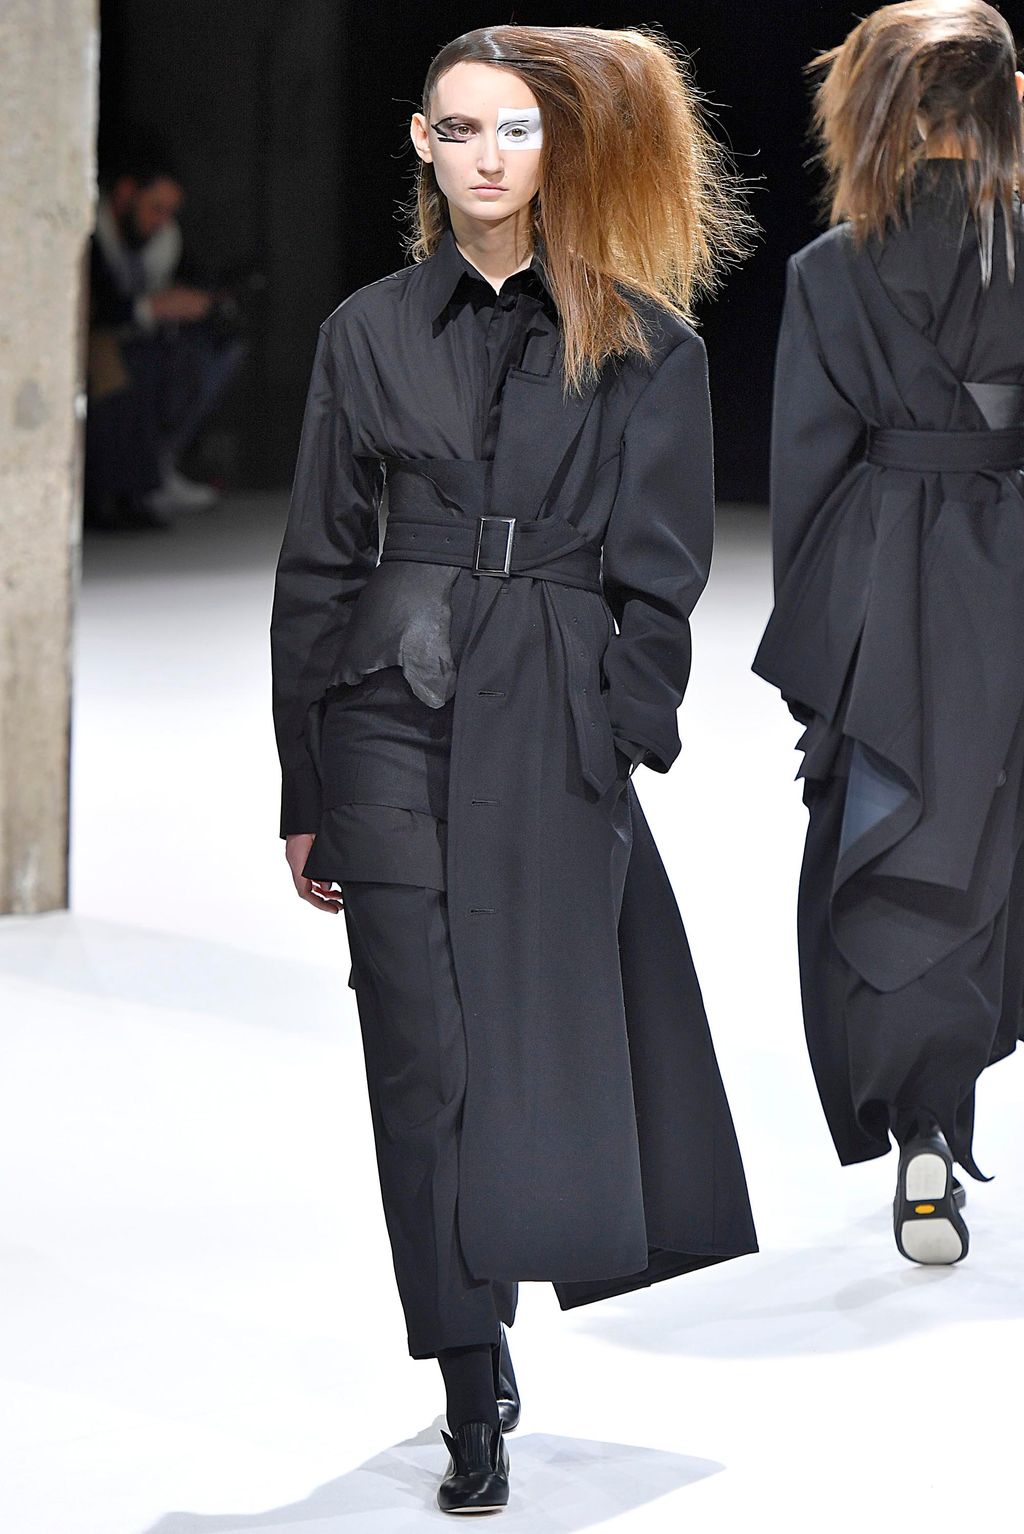 Yohji Yamamoto F/W 18 womenswear #19 - Tagwalk: The Fashion Search